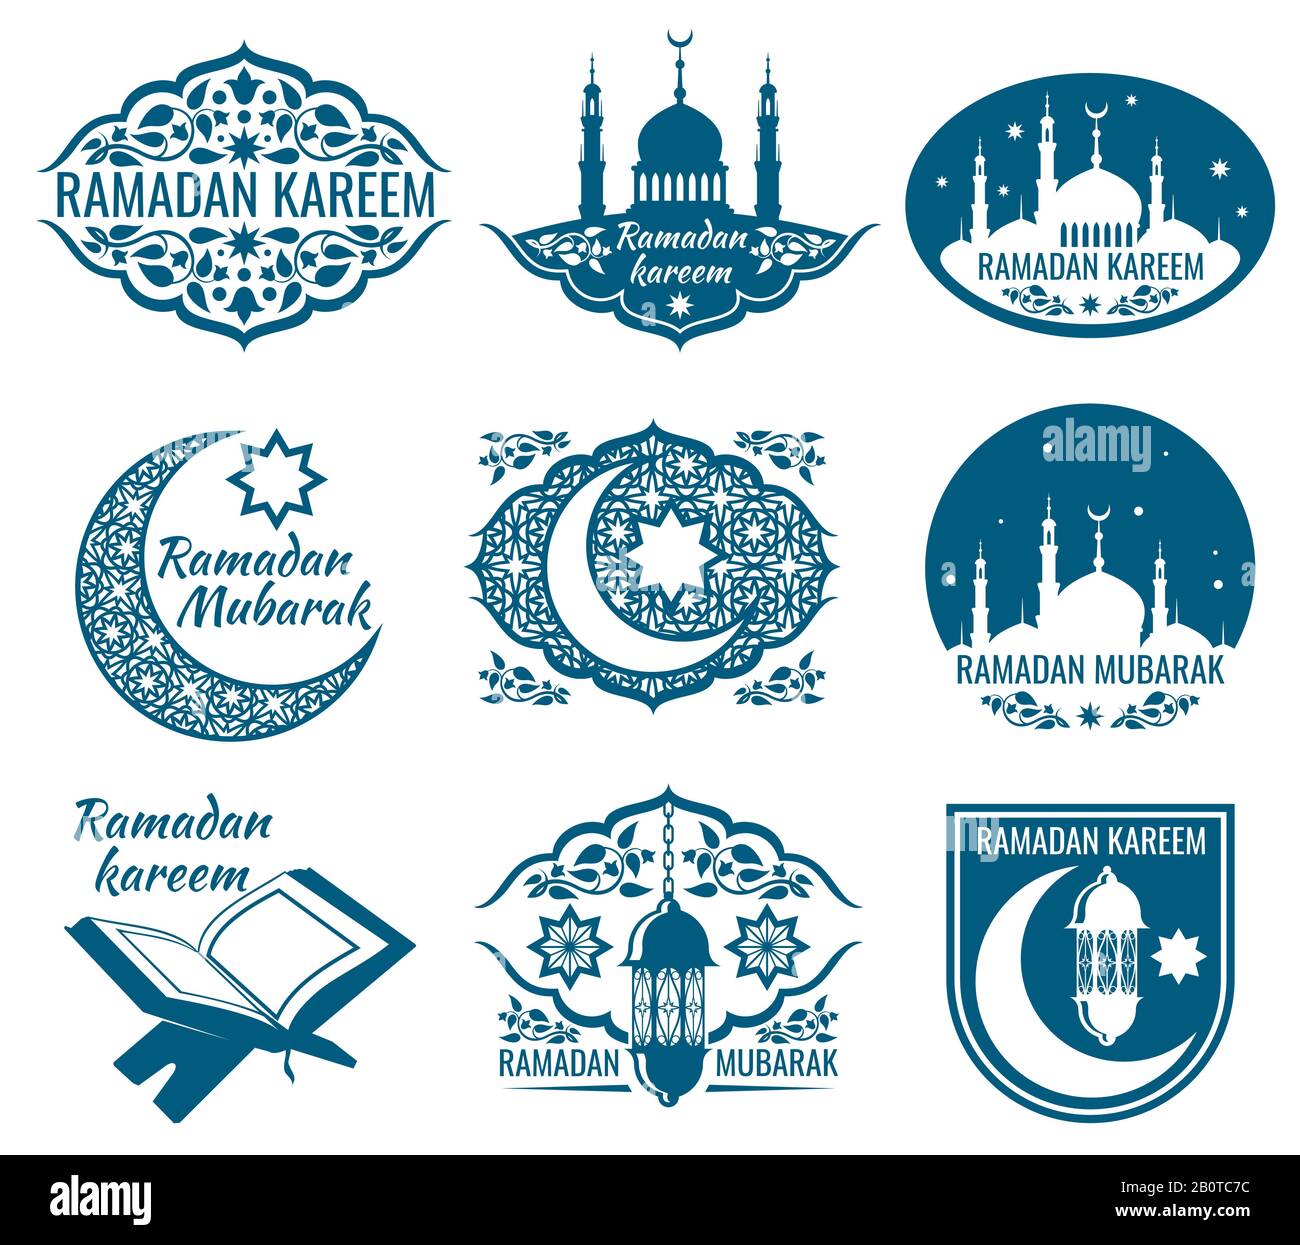 Ramadan kareem islamic logo design Royalty Free Vector Image